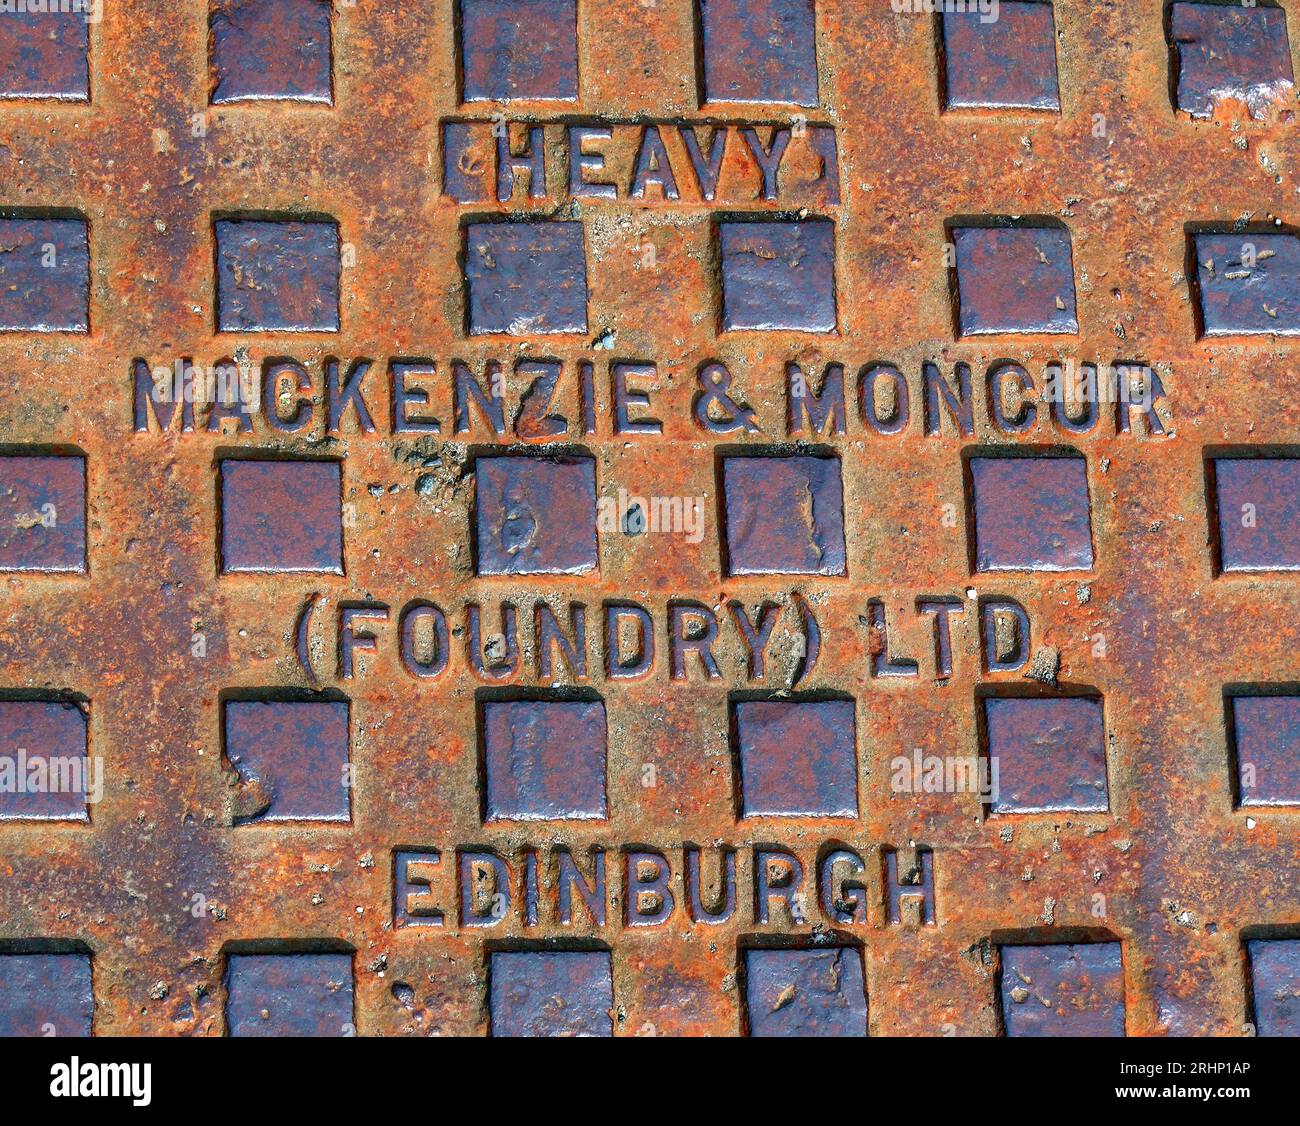 Heavy cast iron grid embossed with Mackenzie & Moncur (Foundry) Ltd, Edinburgh, Scotland, UK, EH1 3QB Stock Photo